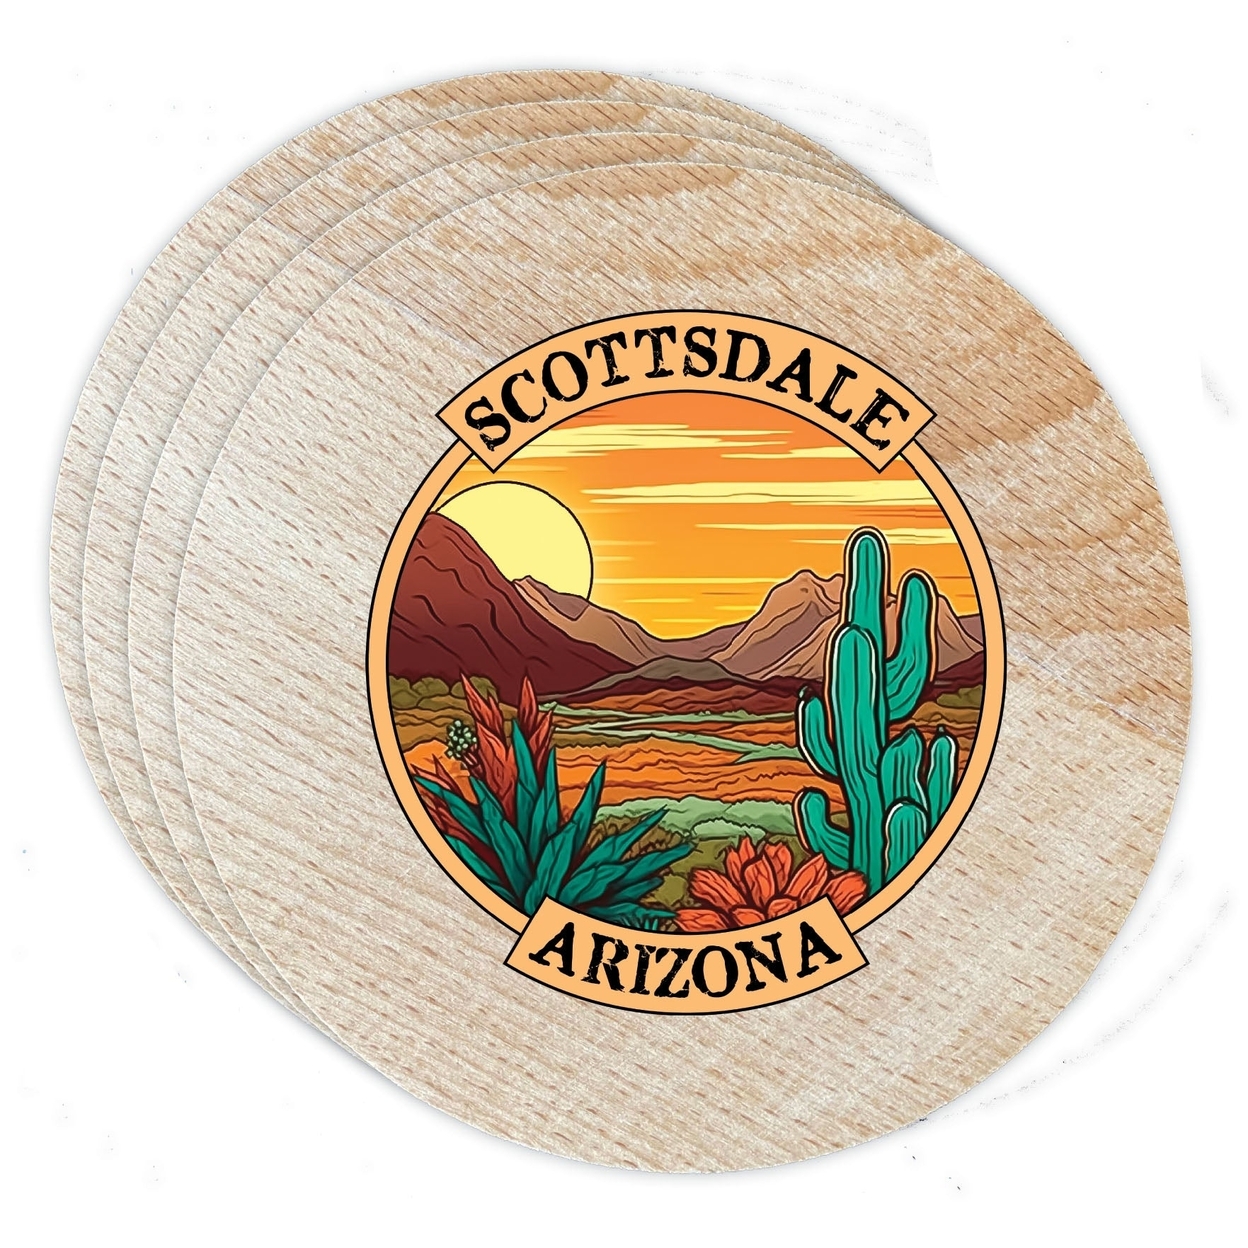 Scottsdale Arizona Design A Souvenir Coaster Wooden 3.5 X 3.5-Inch 4 Pack